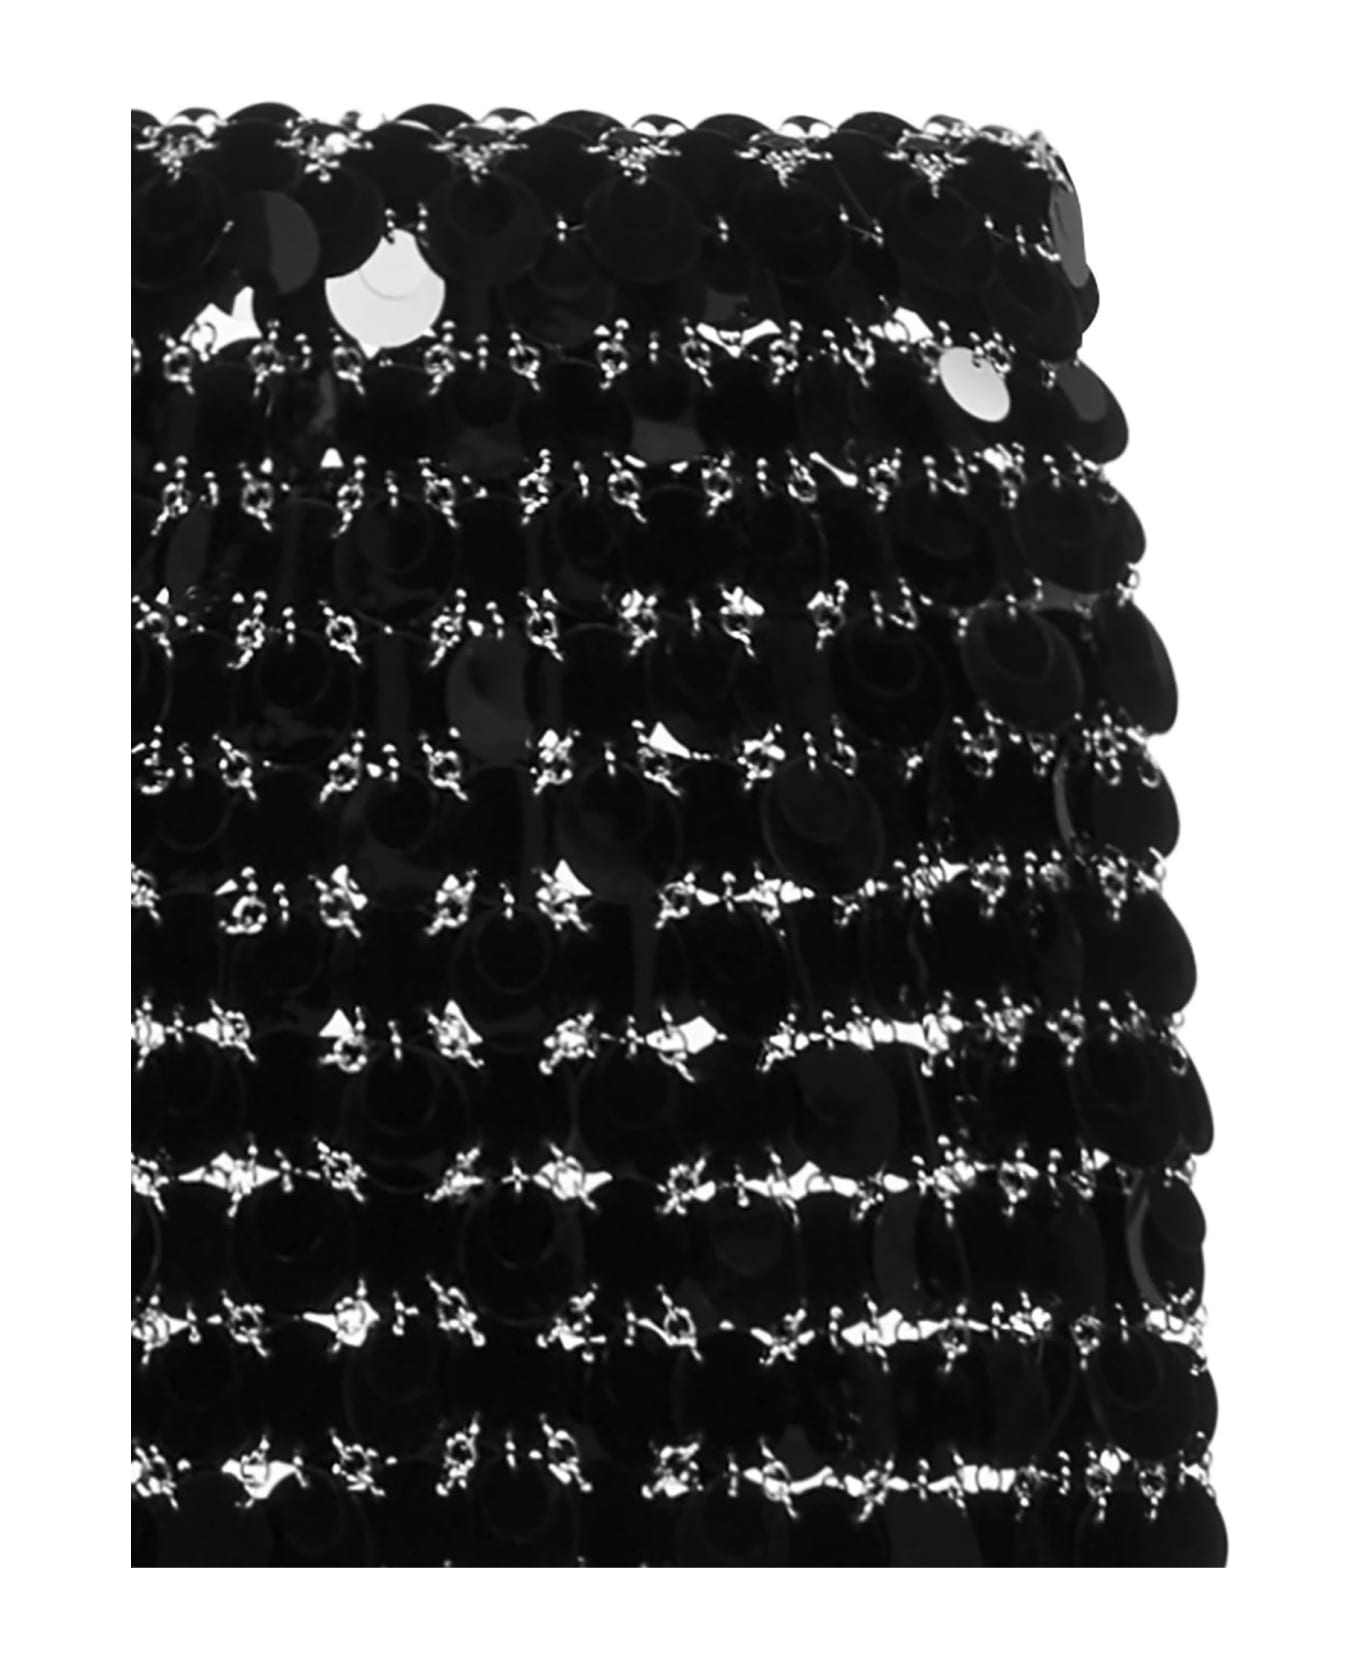 Paco Rabanne Black Short Skirt With Mirror Effect Discs - Black